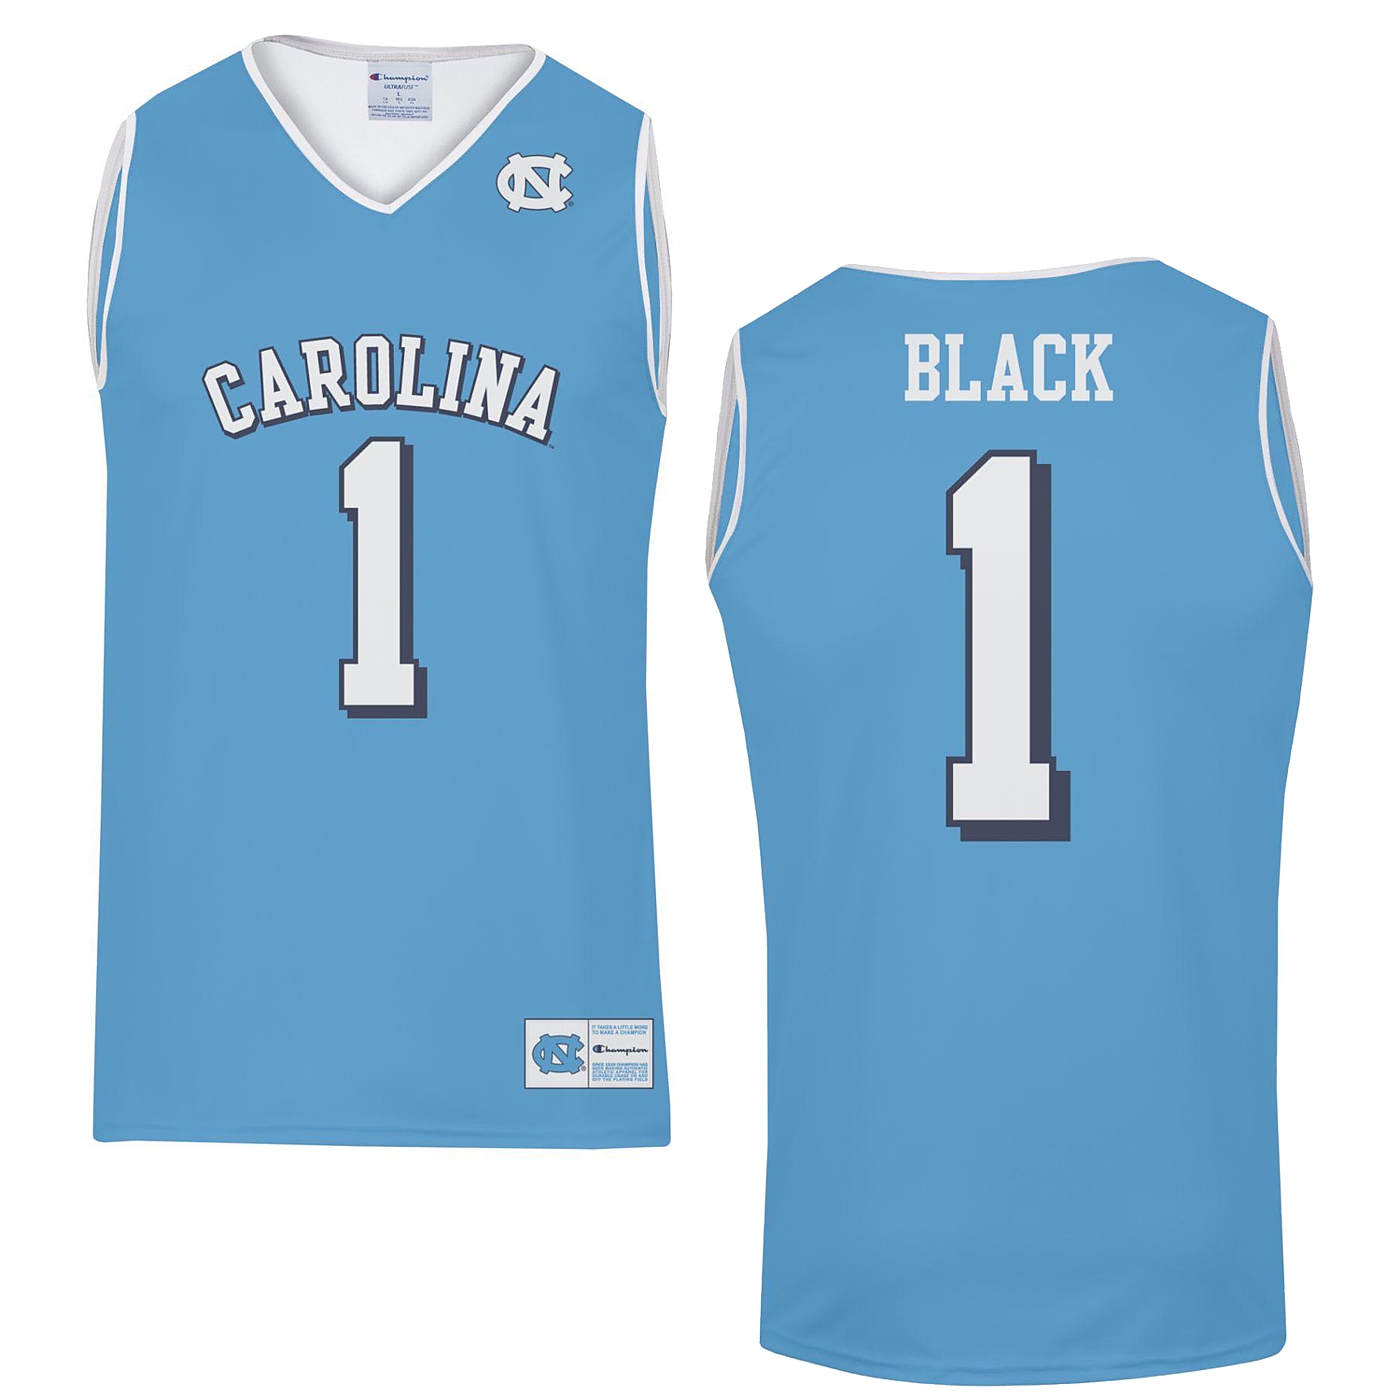 South Carolina Basketball Jerseys, South Carolina Basketball Gear